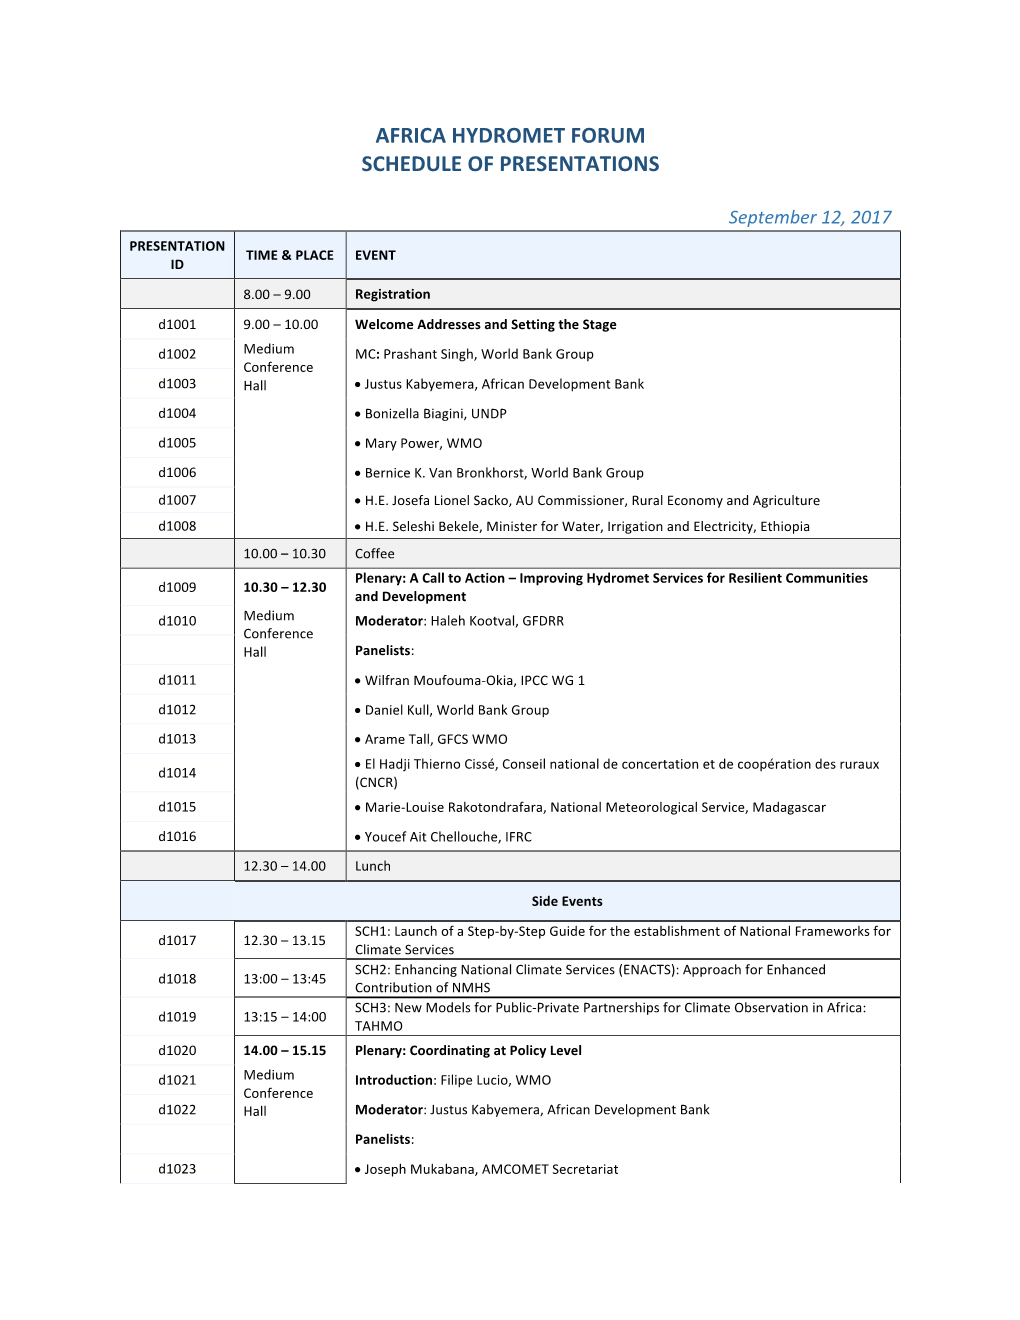 AHF Schedule of Presentations